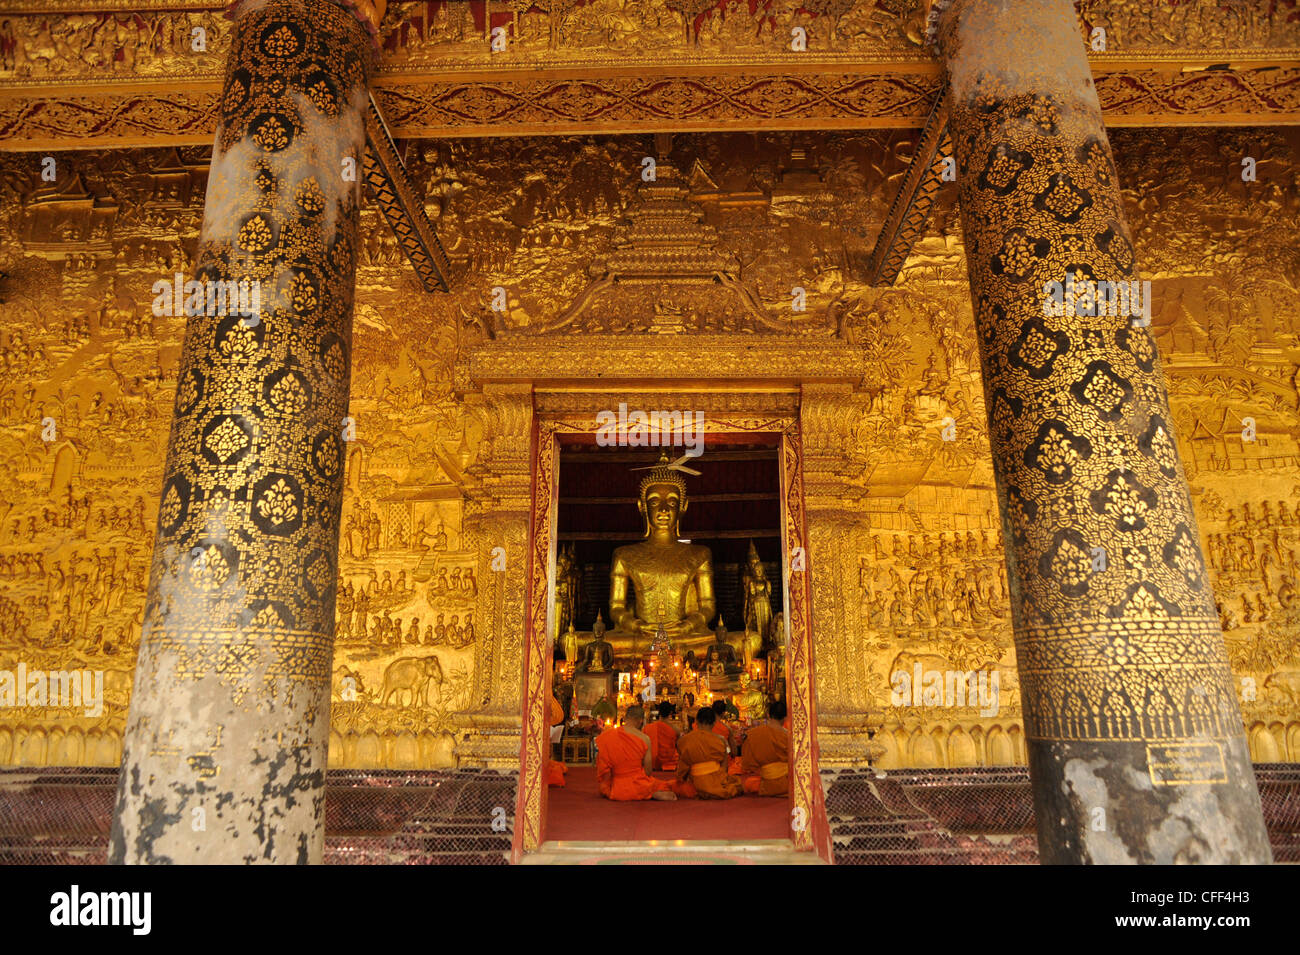 Galerie mit goldenen Relief und Mönche beim Abendgebet, Wat Mai Suwannaphumaham, Luang Prabang, Laos, Laos Völker demokratische Rep Stockfoto